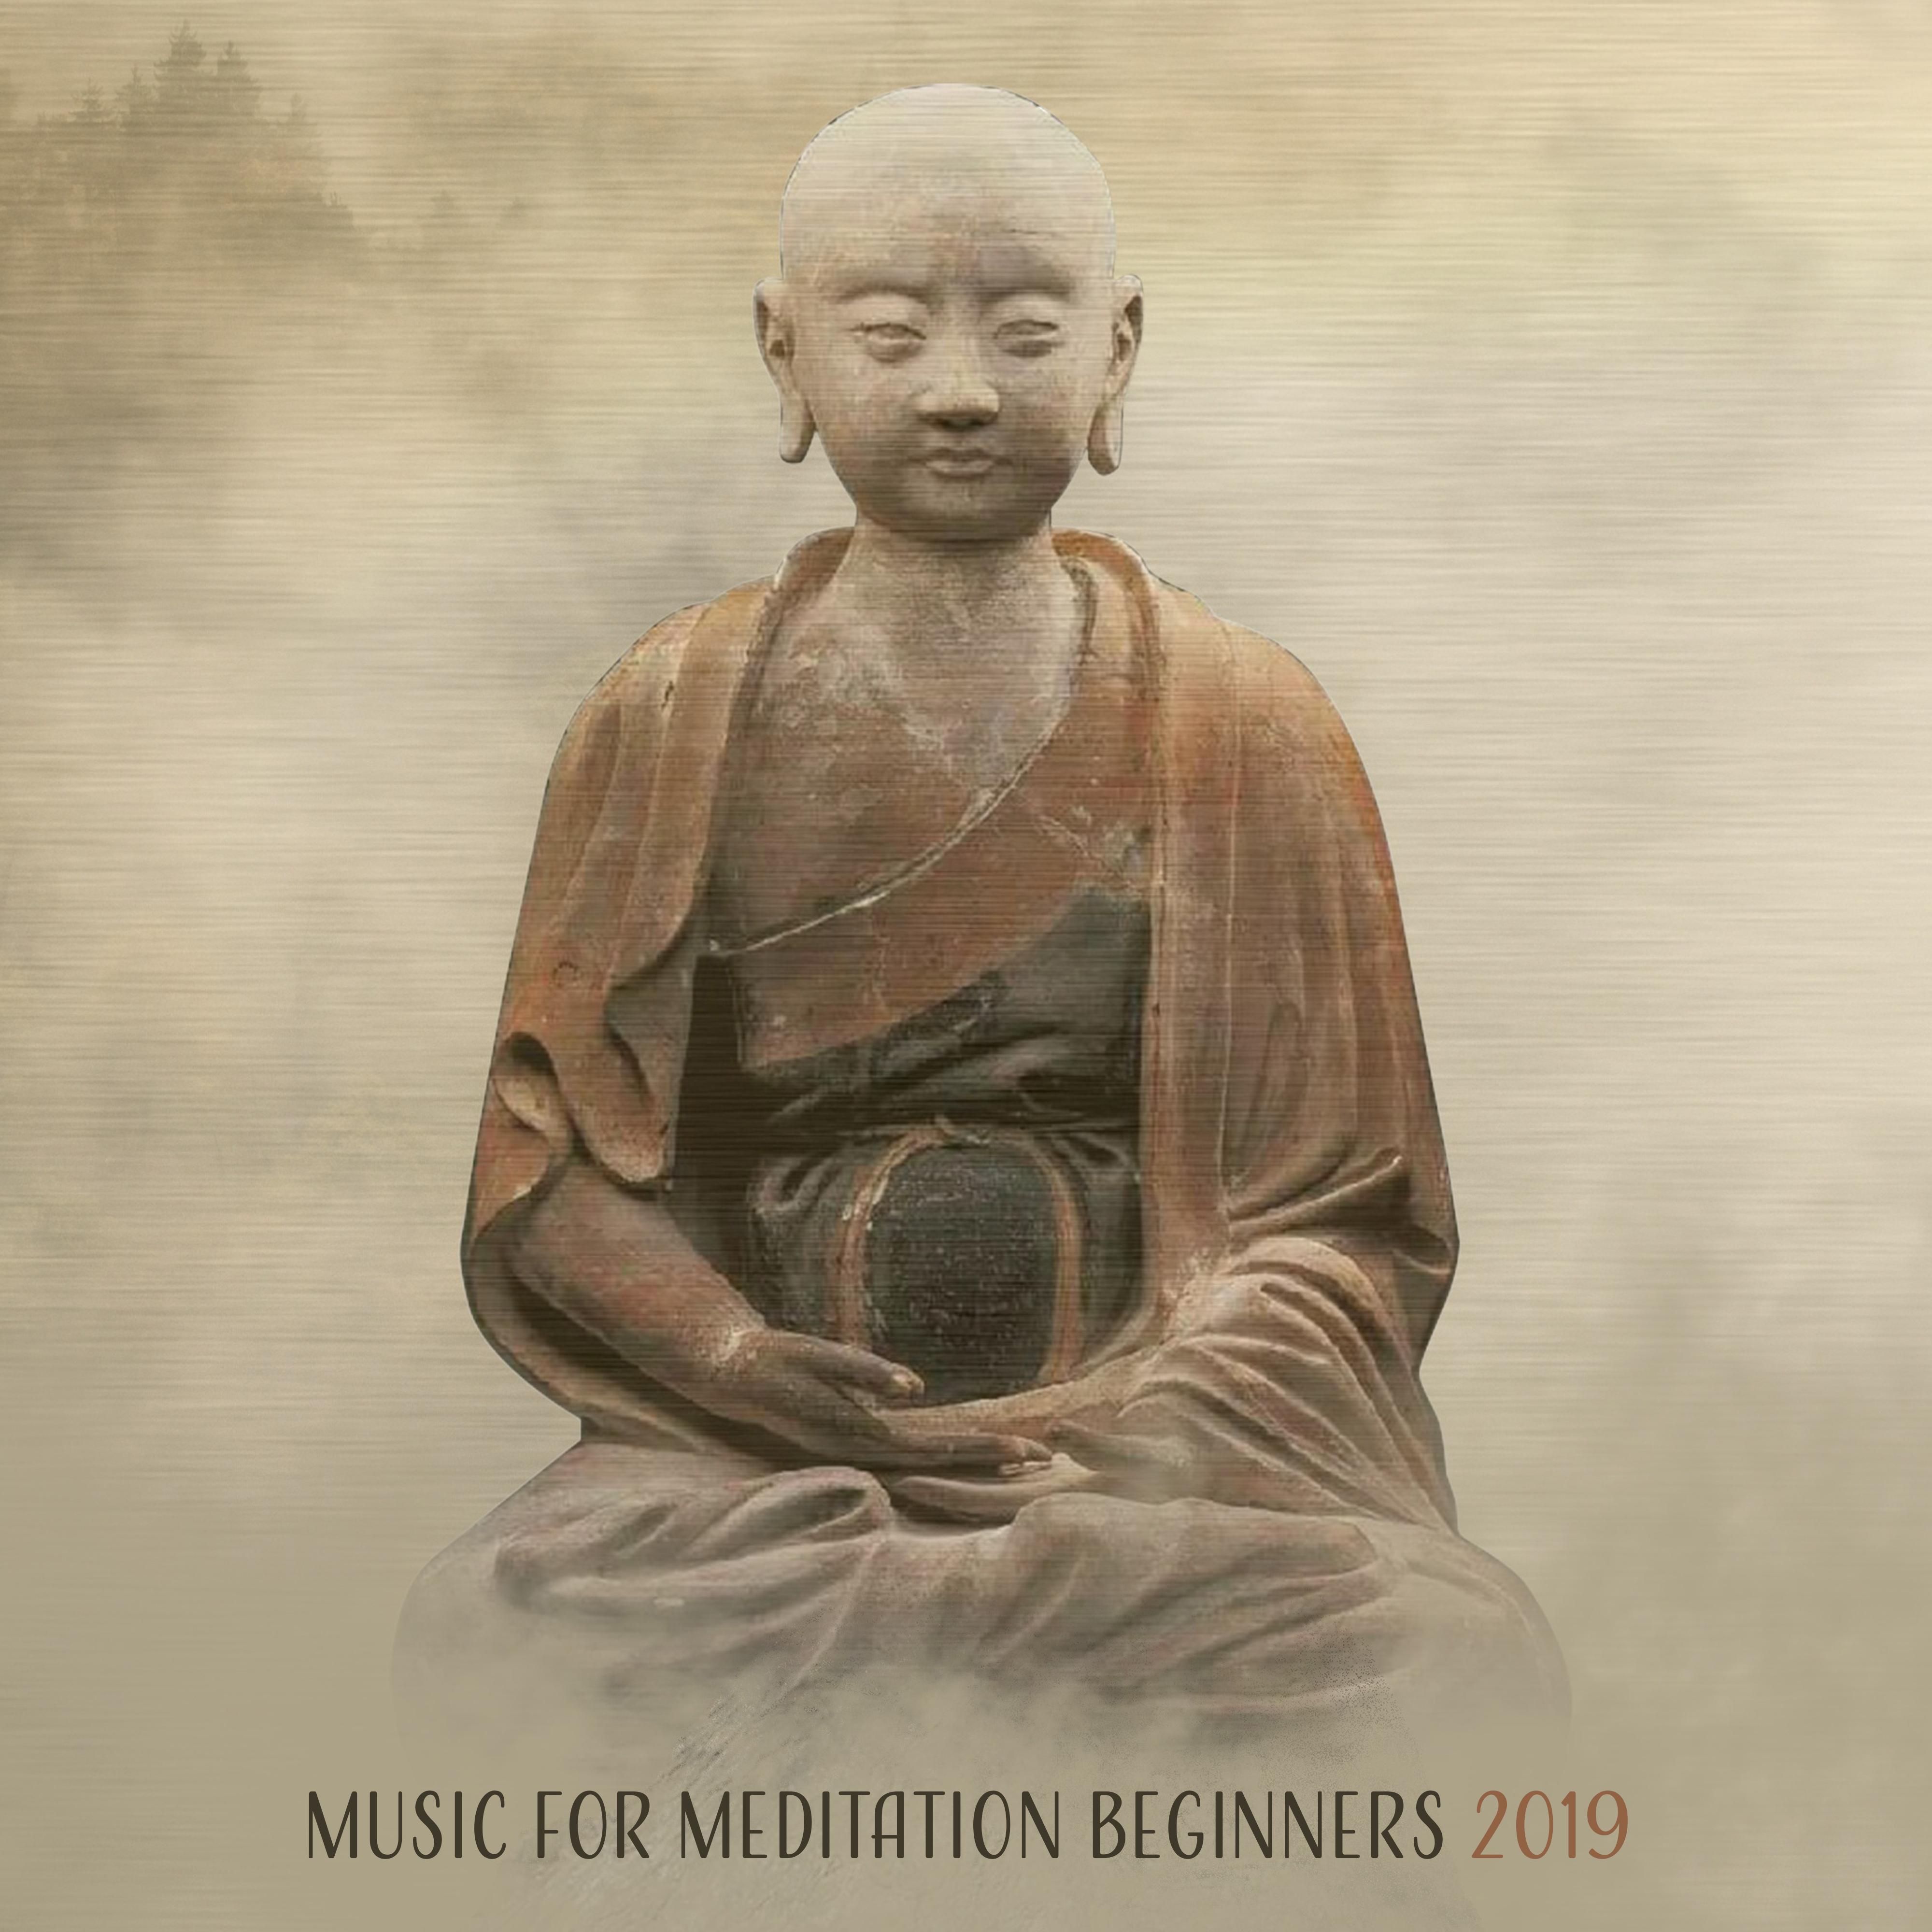 Music for Meditation Beginners 2019  15 New Age Songs to Practice Yoga Positions, Full Relax  Inner Calmness